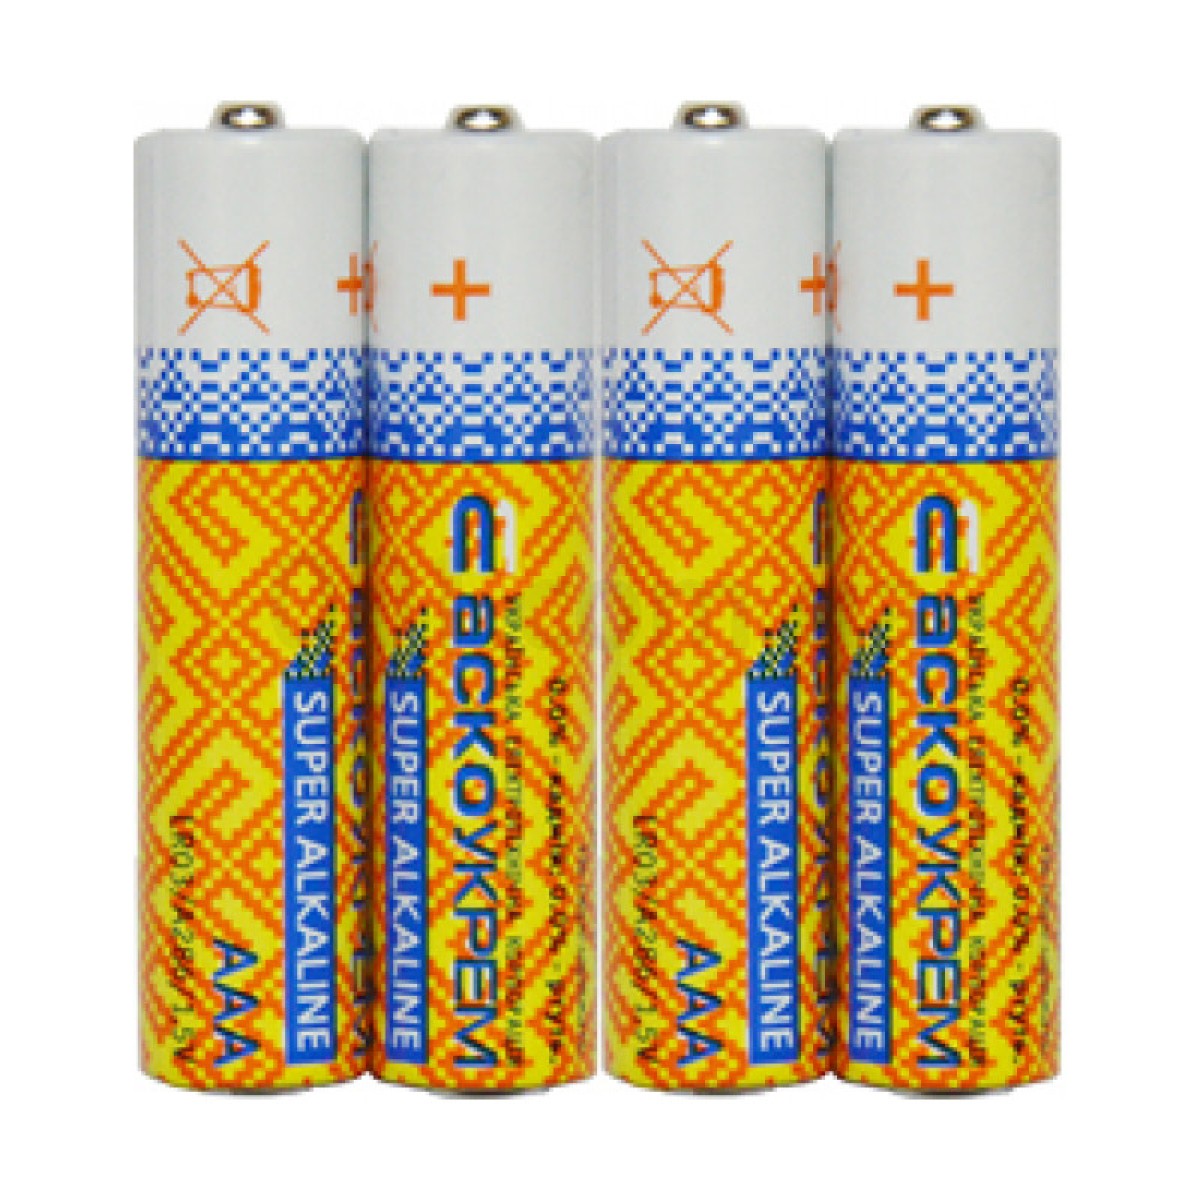 Батарейка лужна AАА.LR03.SP4, типорозмір AAA упаковка shrink 4 шт., АСКО-УКРЕМ 98_98.jpg